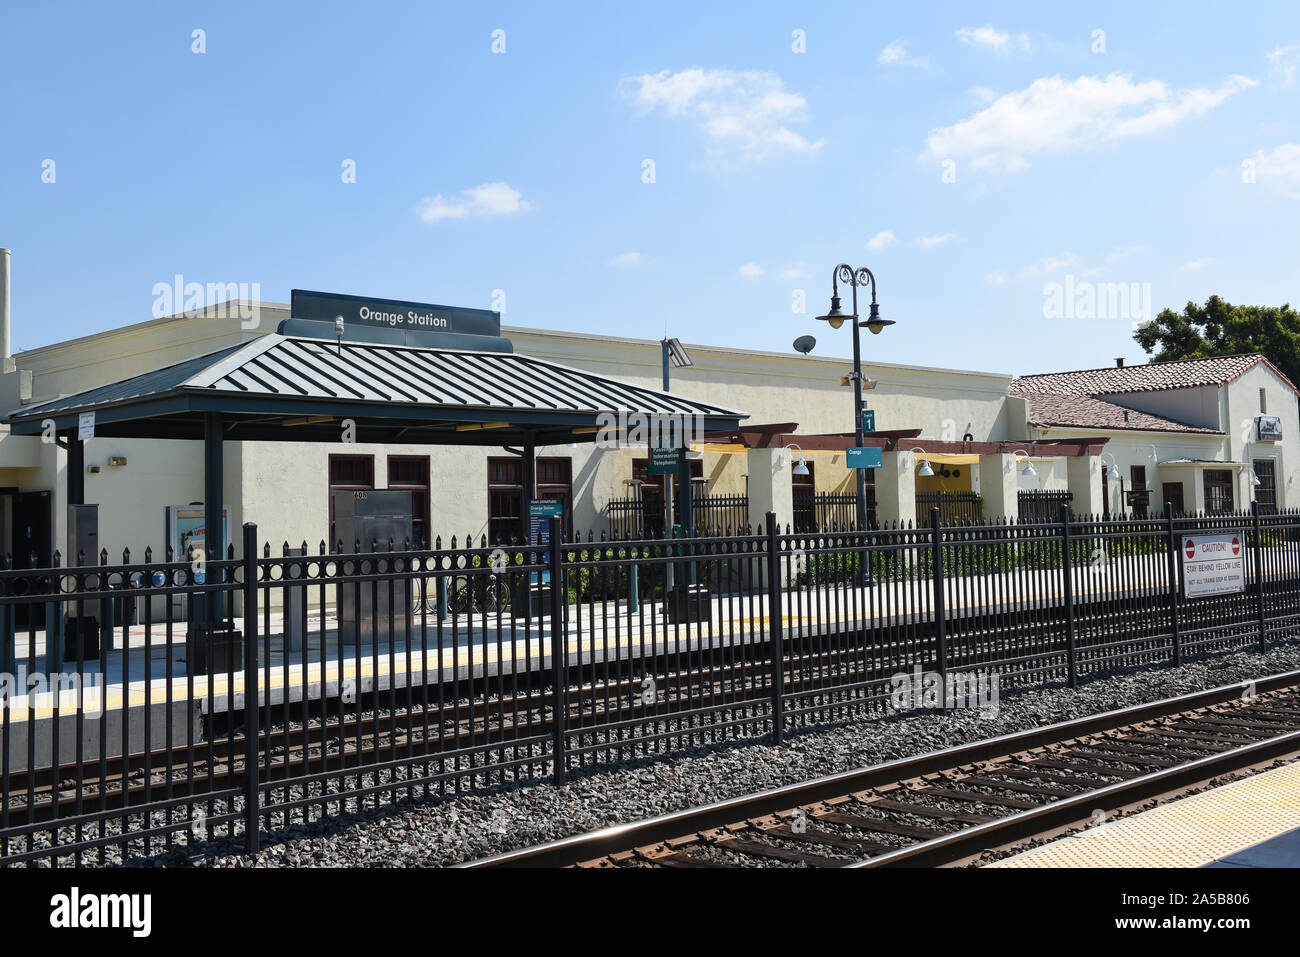 ORANGE, CALIFORNIA - 14 OCT 2019: The Orange Train Station serves Metrolink trains as well as Orange County Transportation Authority buses. Stock Photo